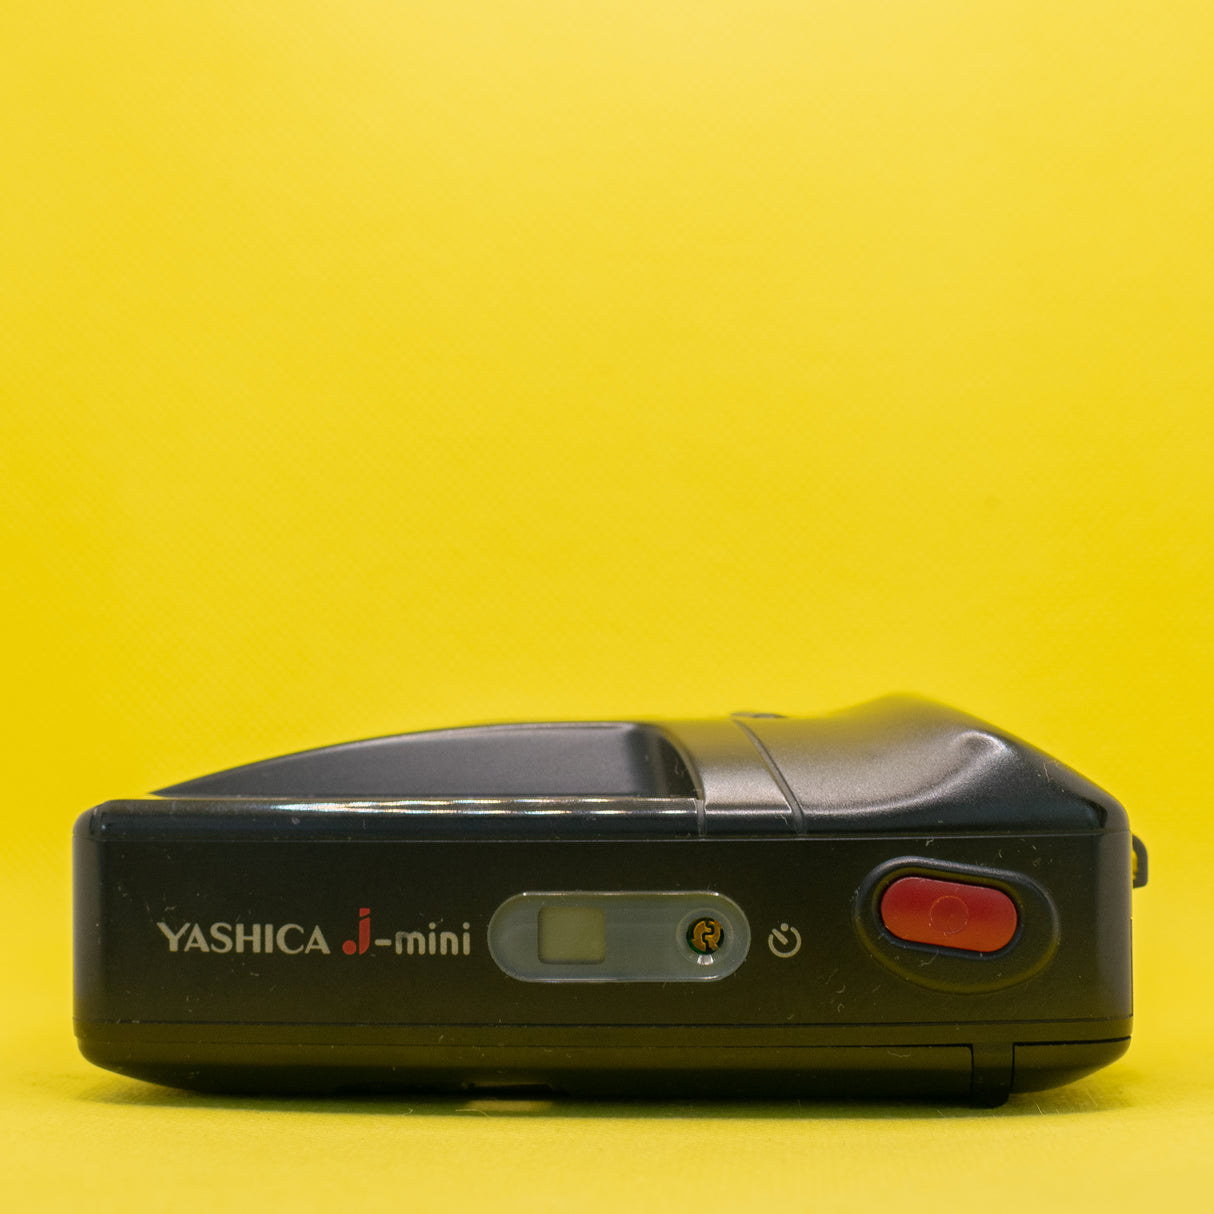 Yashica J Mini F3.5 - 35mm Compact Film Camera